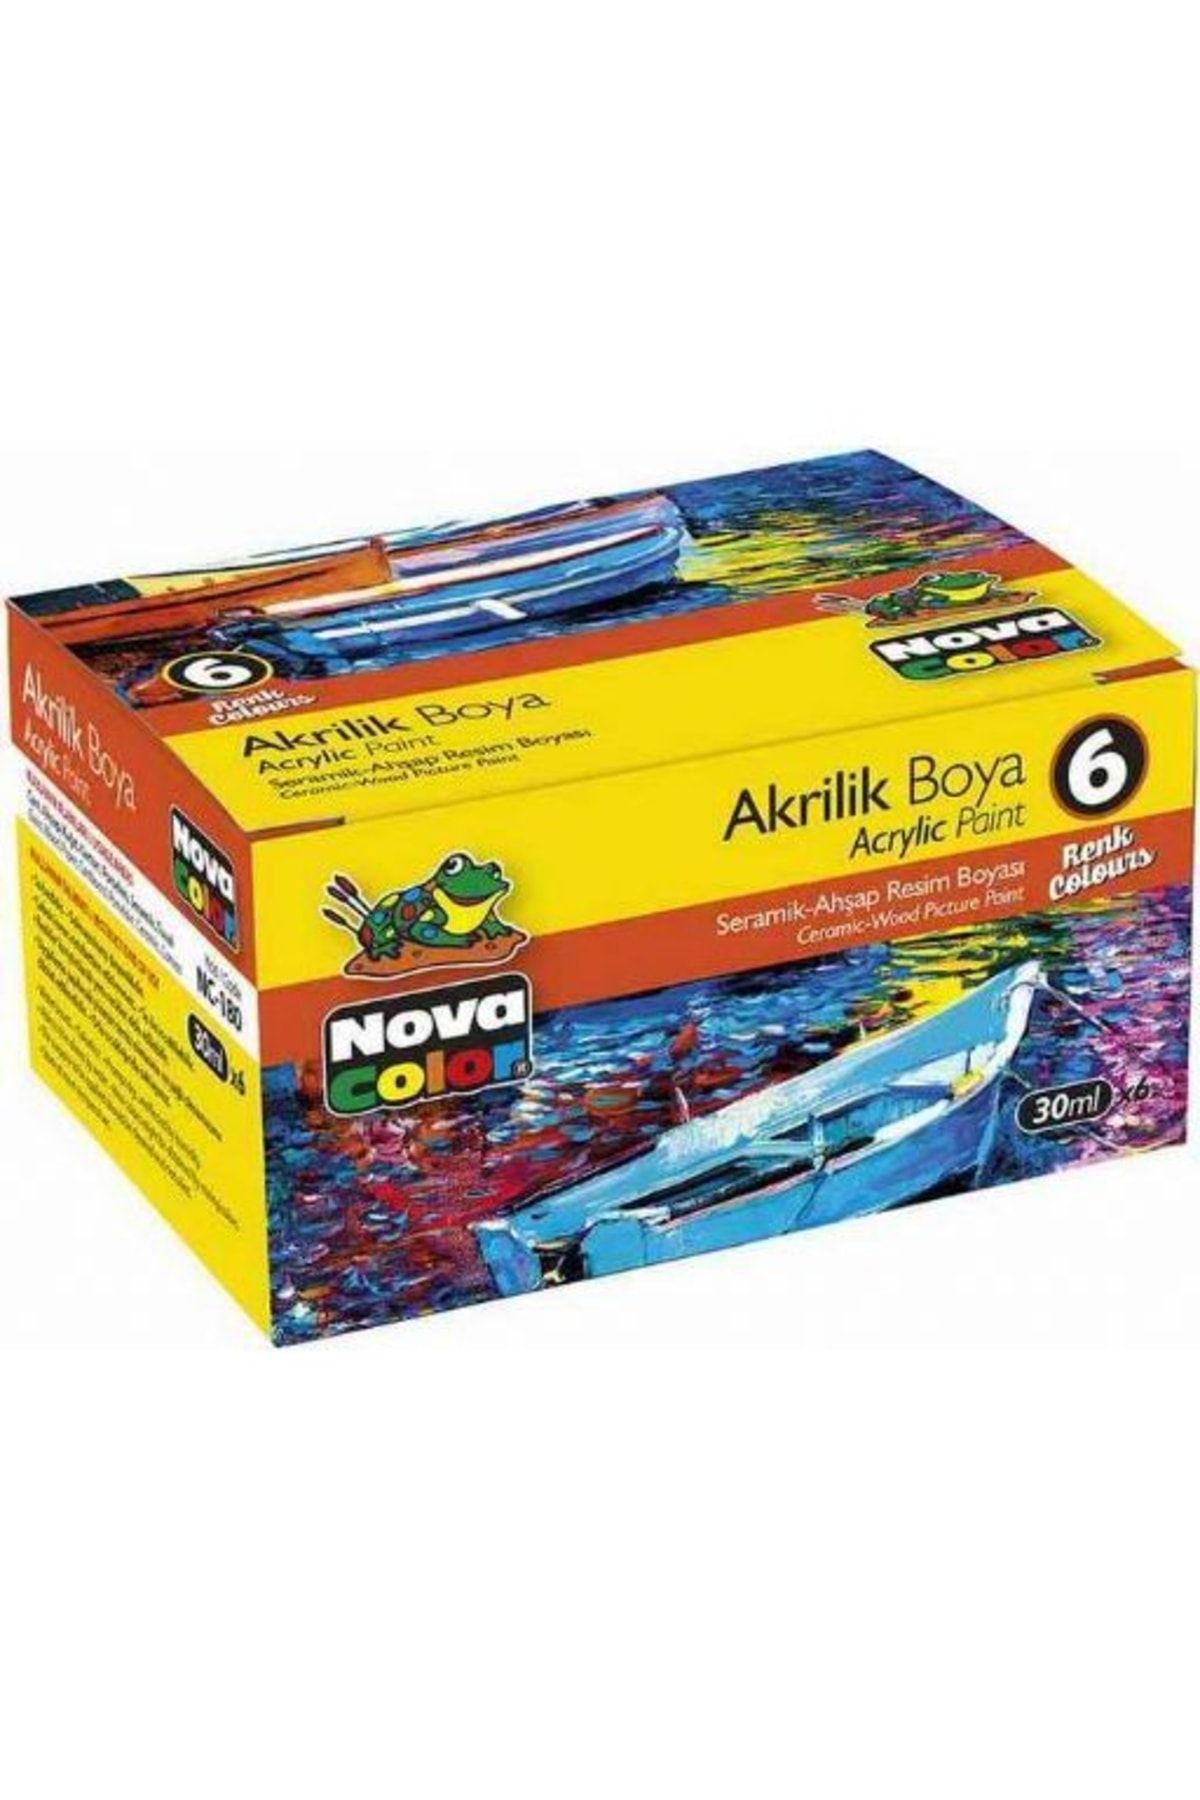 Artdeco Nova Color Akrilik Boya 6 Renk X 30cc